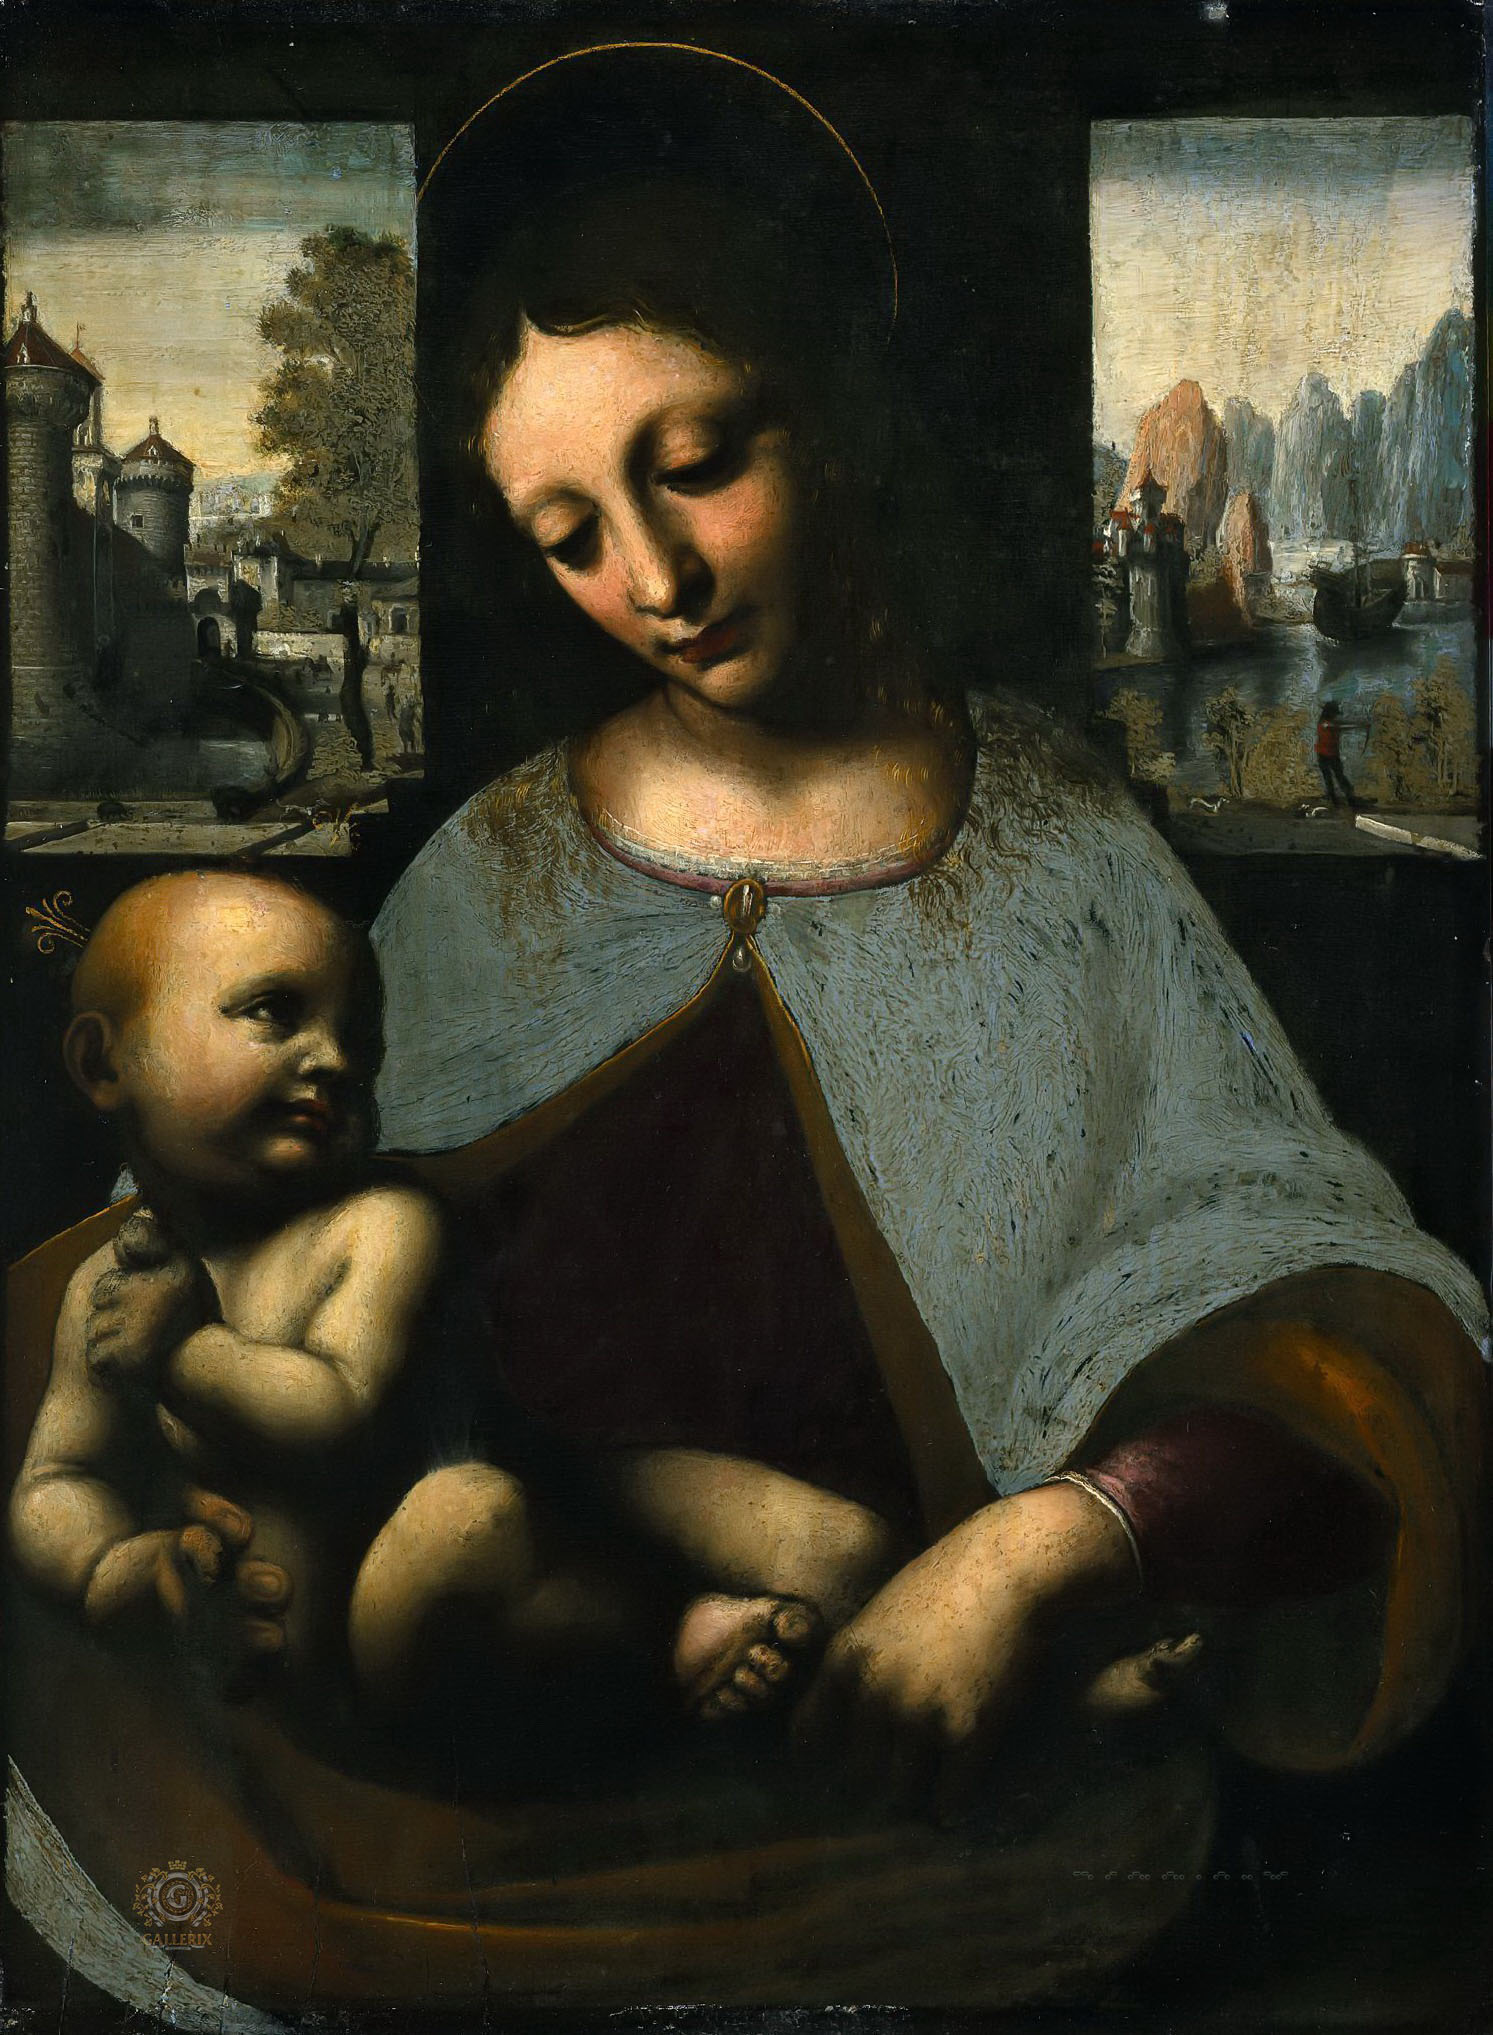 Круг Леонардо да Винчи. "Мадонна с Младенцем". Около 1500. Музей искусств, Кливленд.